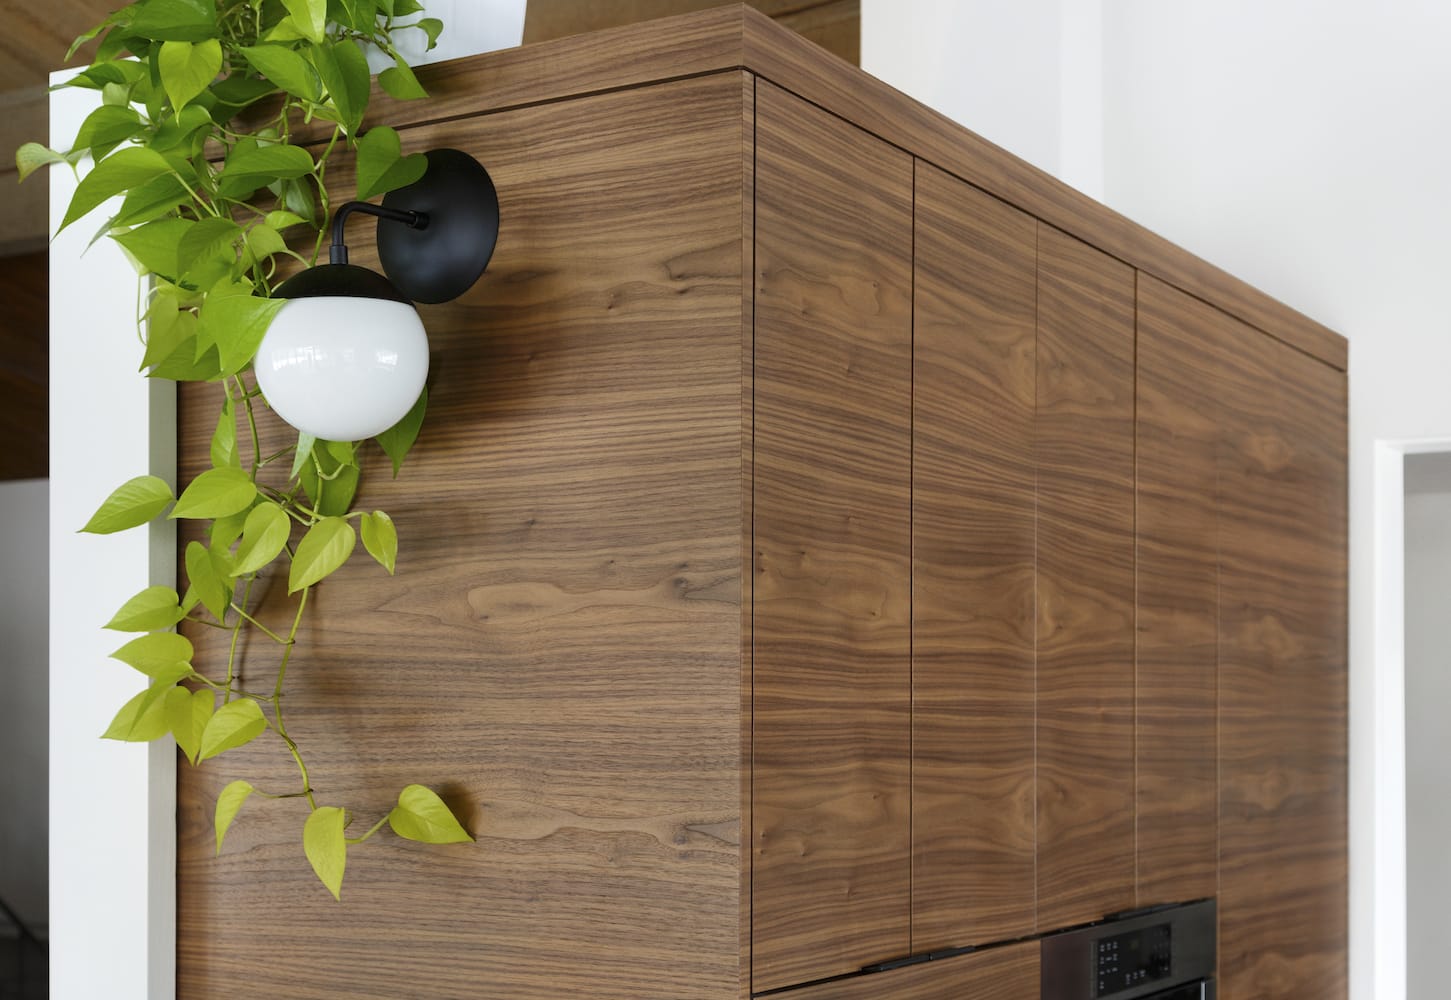 Detail of walnut cabinets by Dyer Studio Interior Design in Portland, Oregon